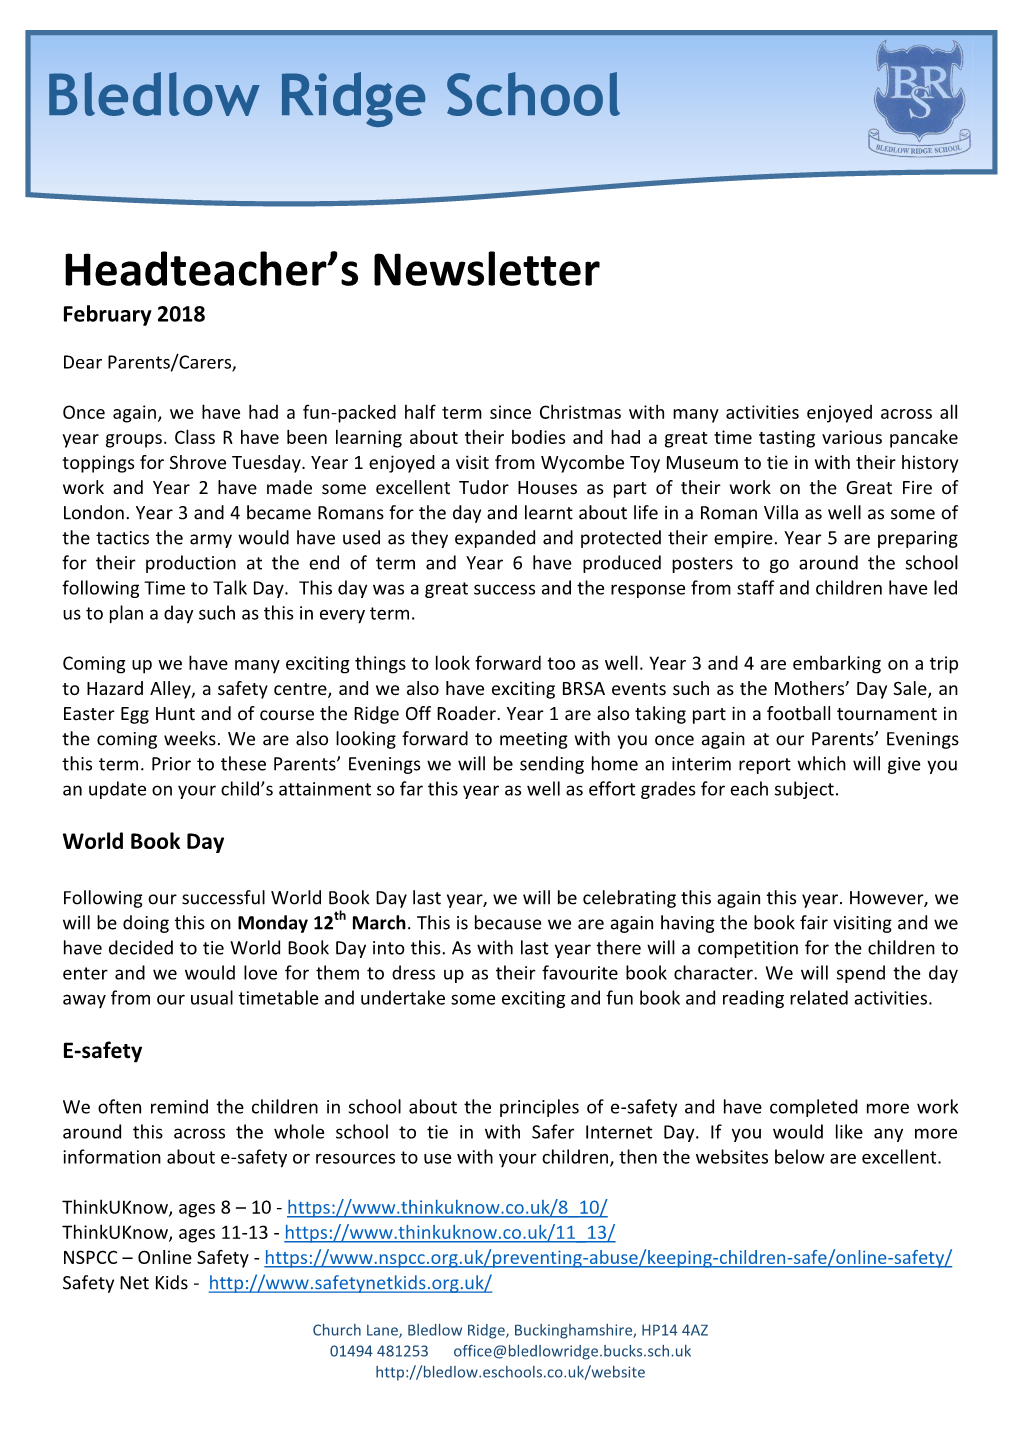 Bledlow Ridge School Headteacher's Newsletter